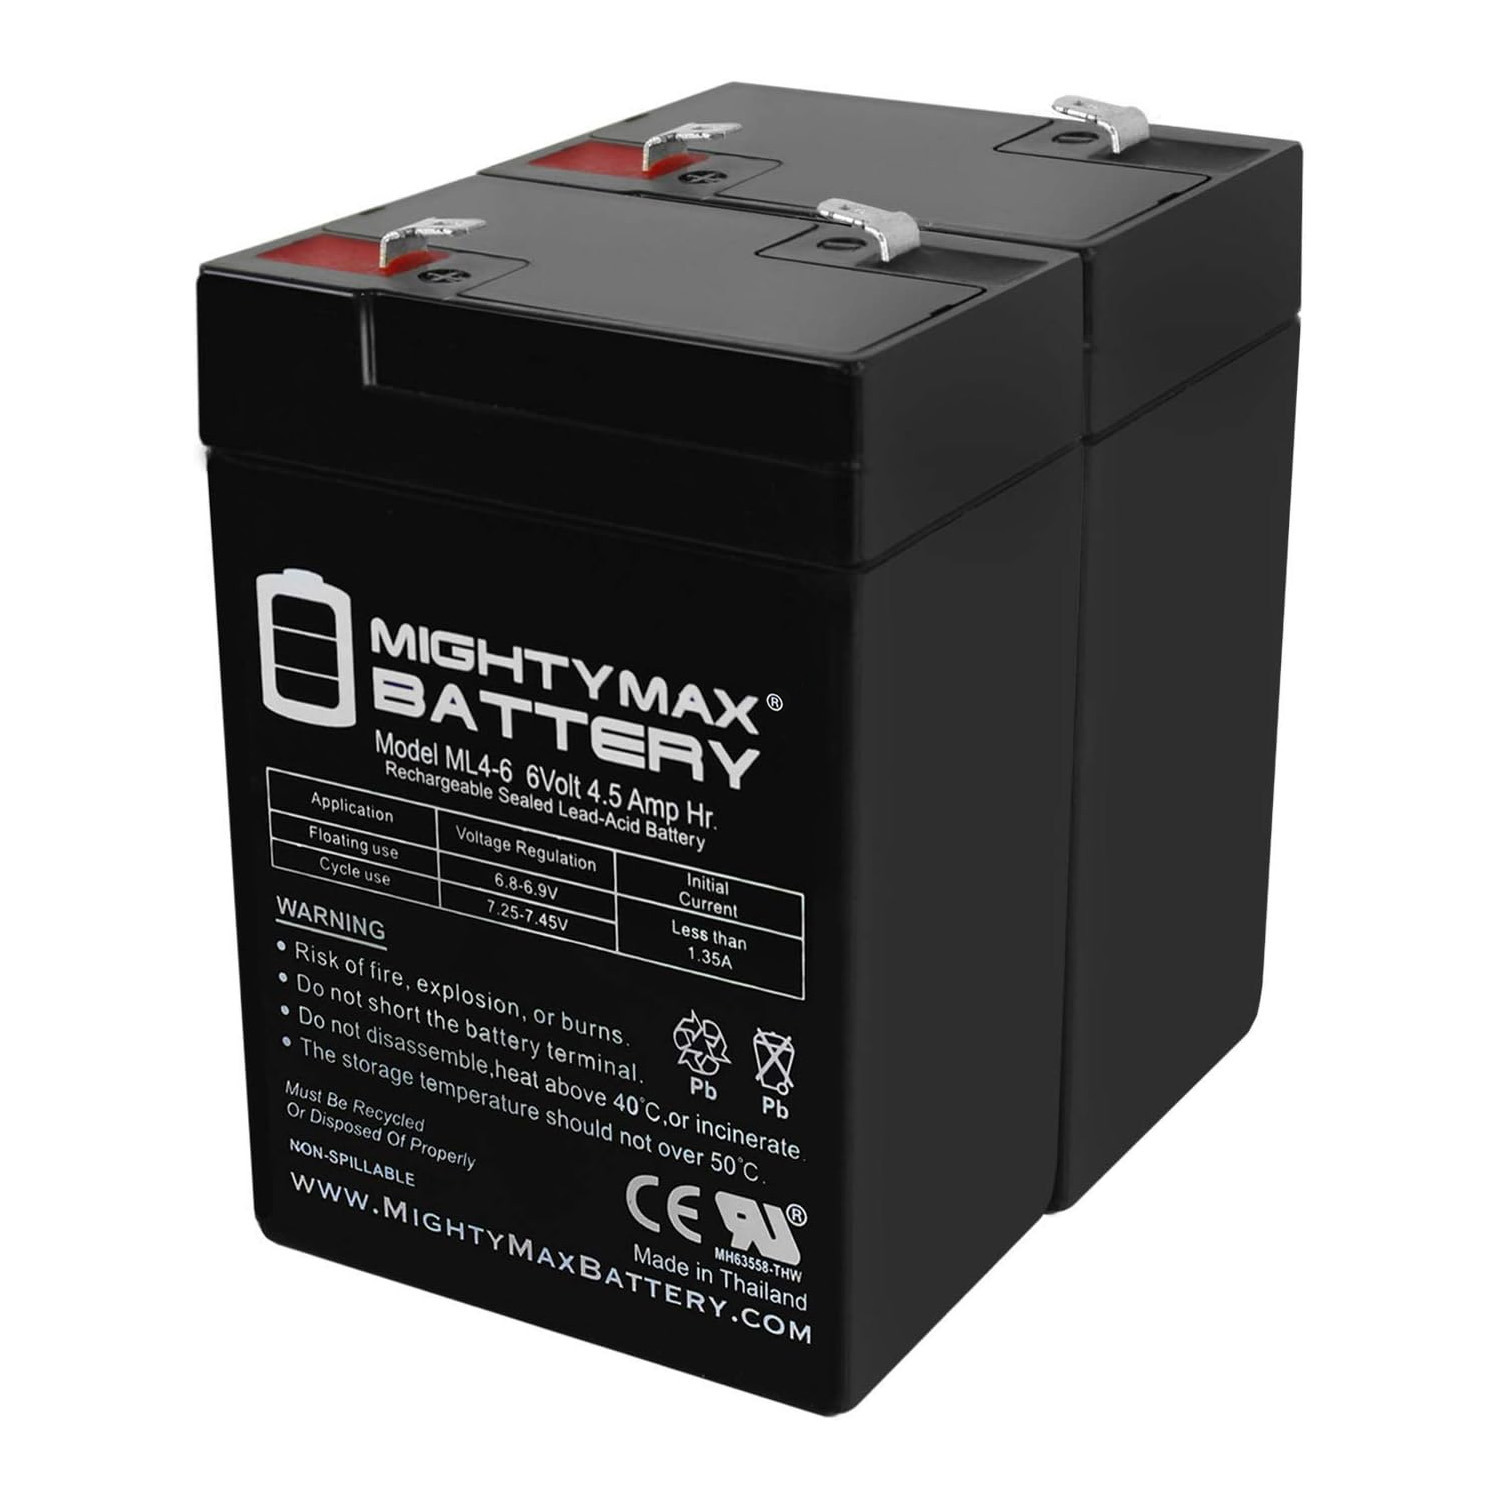 6V 4.5AH SLA Replacement Battery for Leoch DJW6-5.0 - 2 Pack